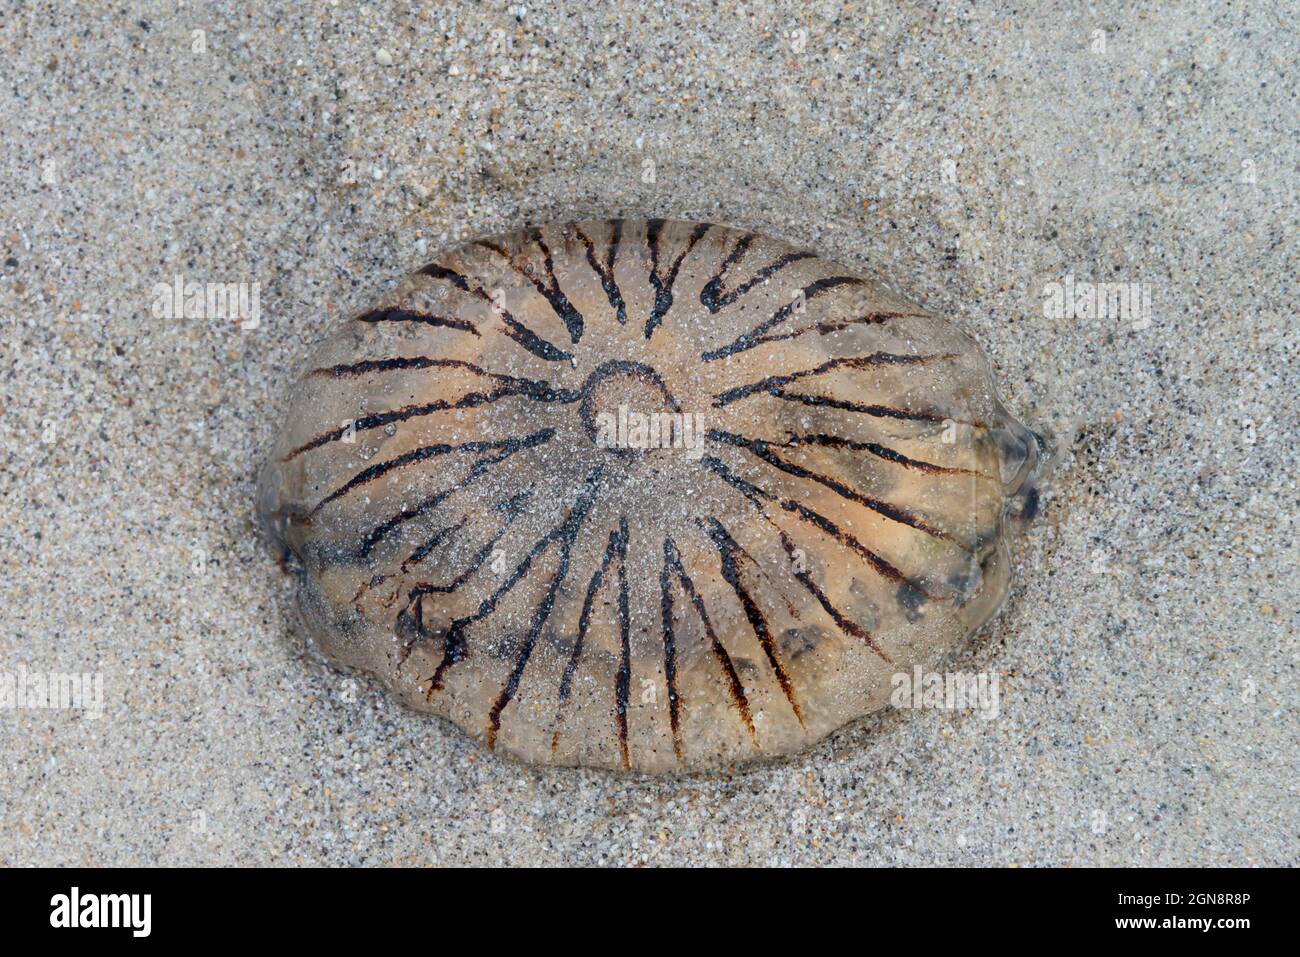 A compass jellyfish (Chrysaora hysoscella) washed up on a sandy beach Stock Photo